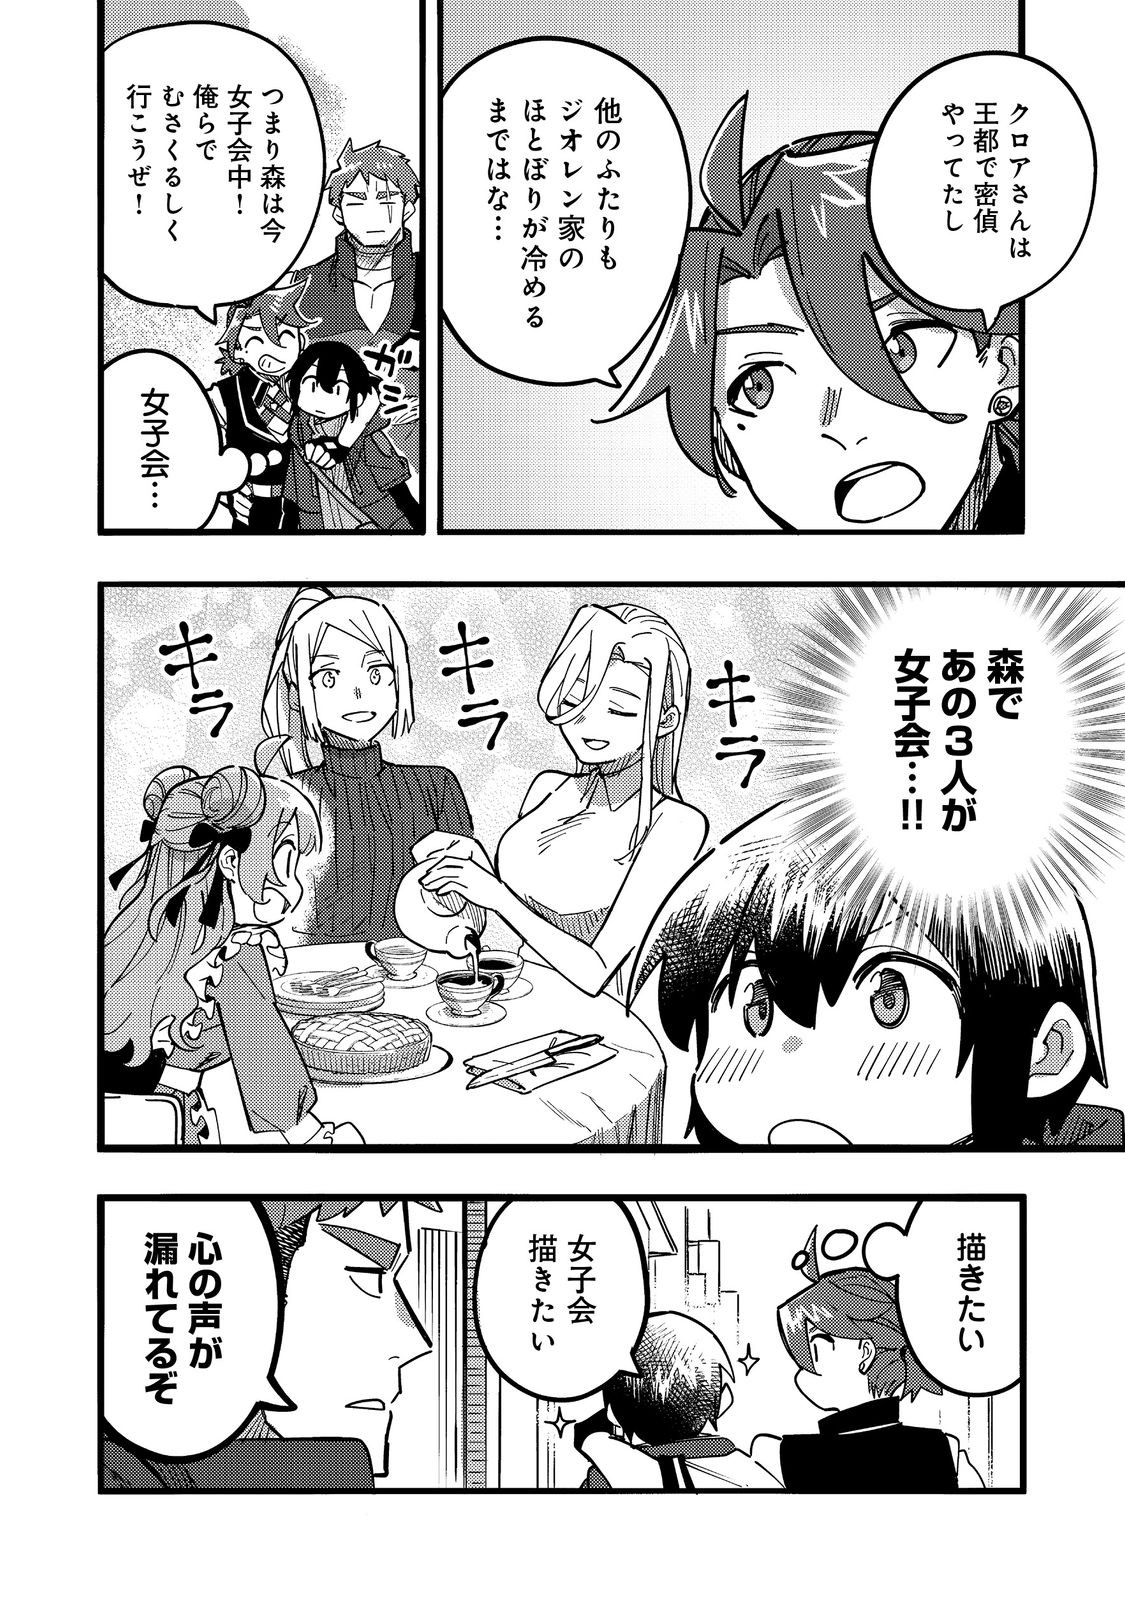 Kyou mo E ni Kaita Mochi ga Umai - Chapter 24 - Page 2